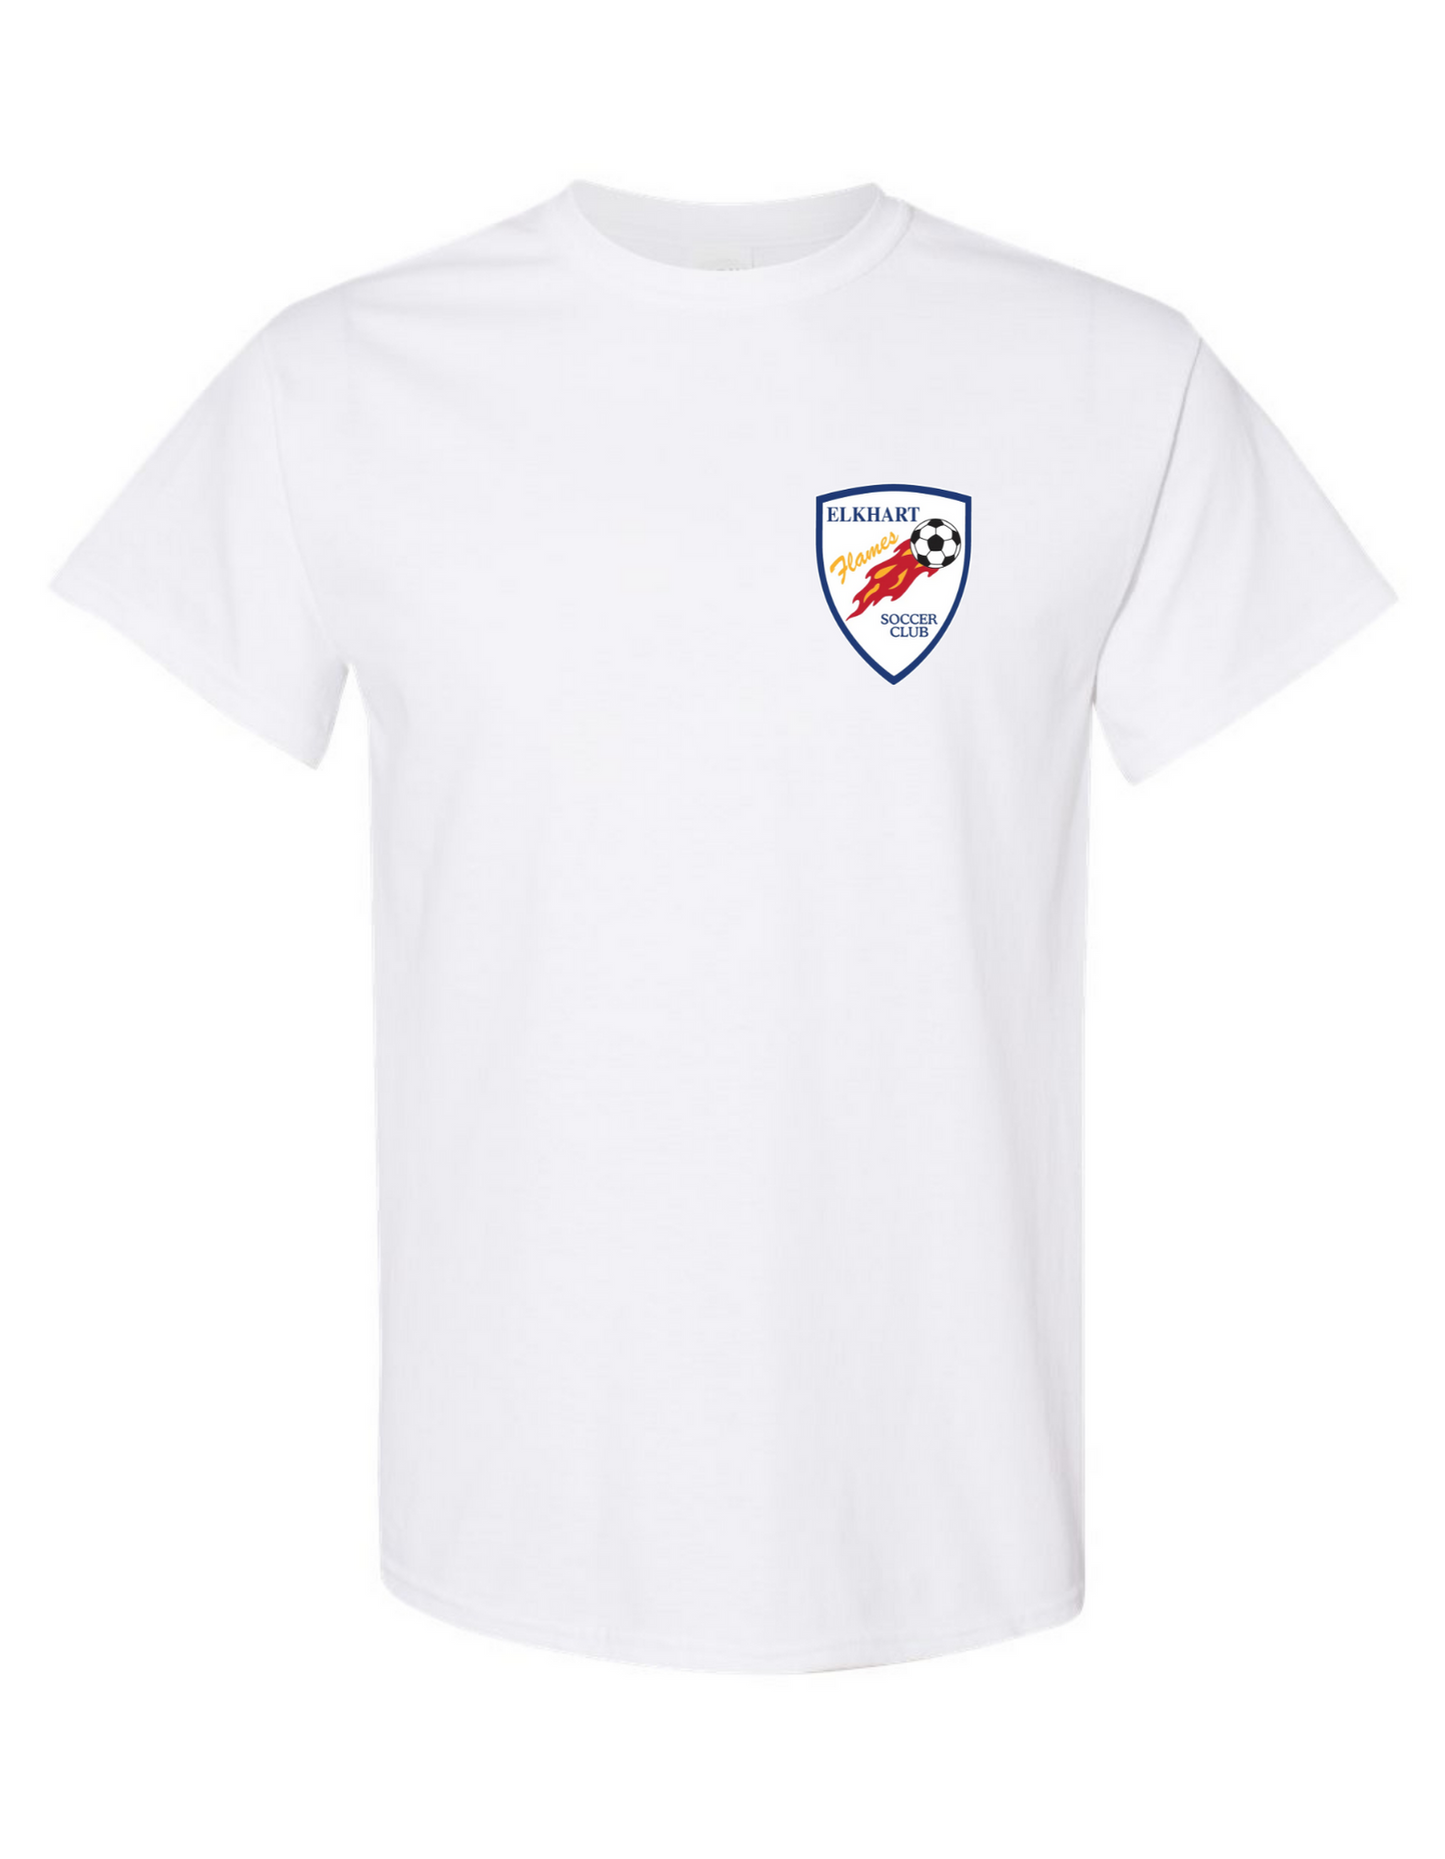 Elkhart Flames Soccer Club Logo Unisex Short Sleeve Tee - Adult